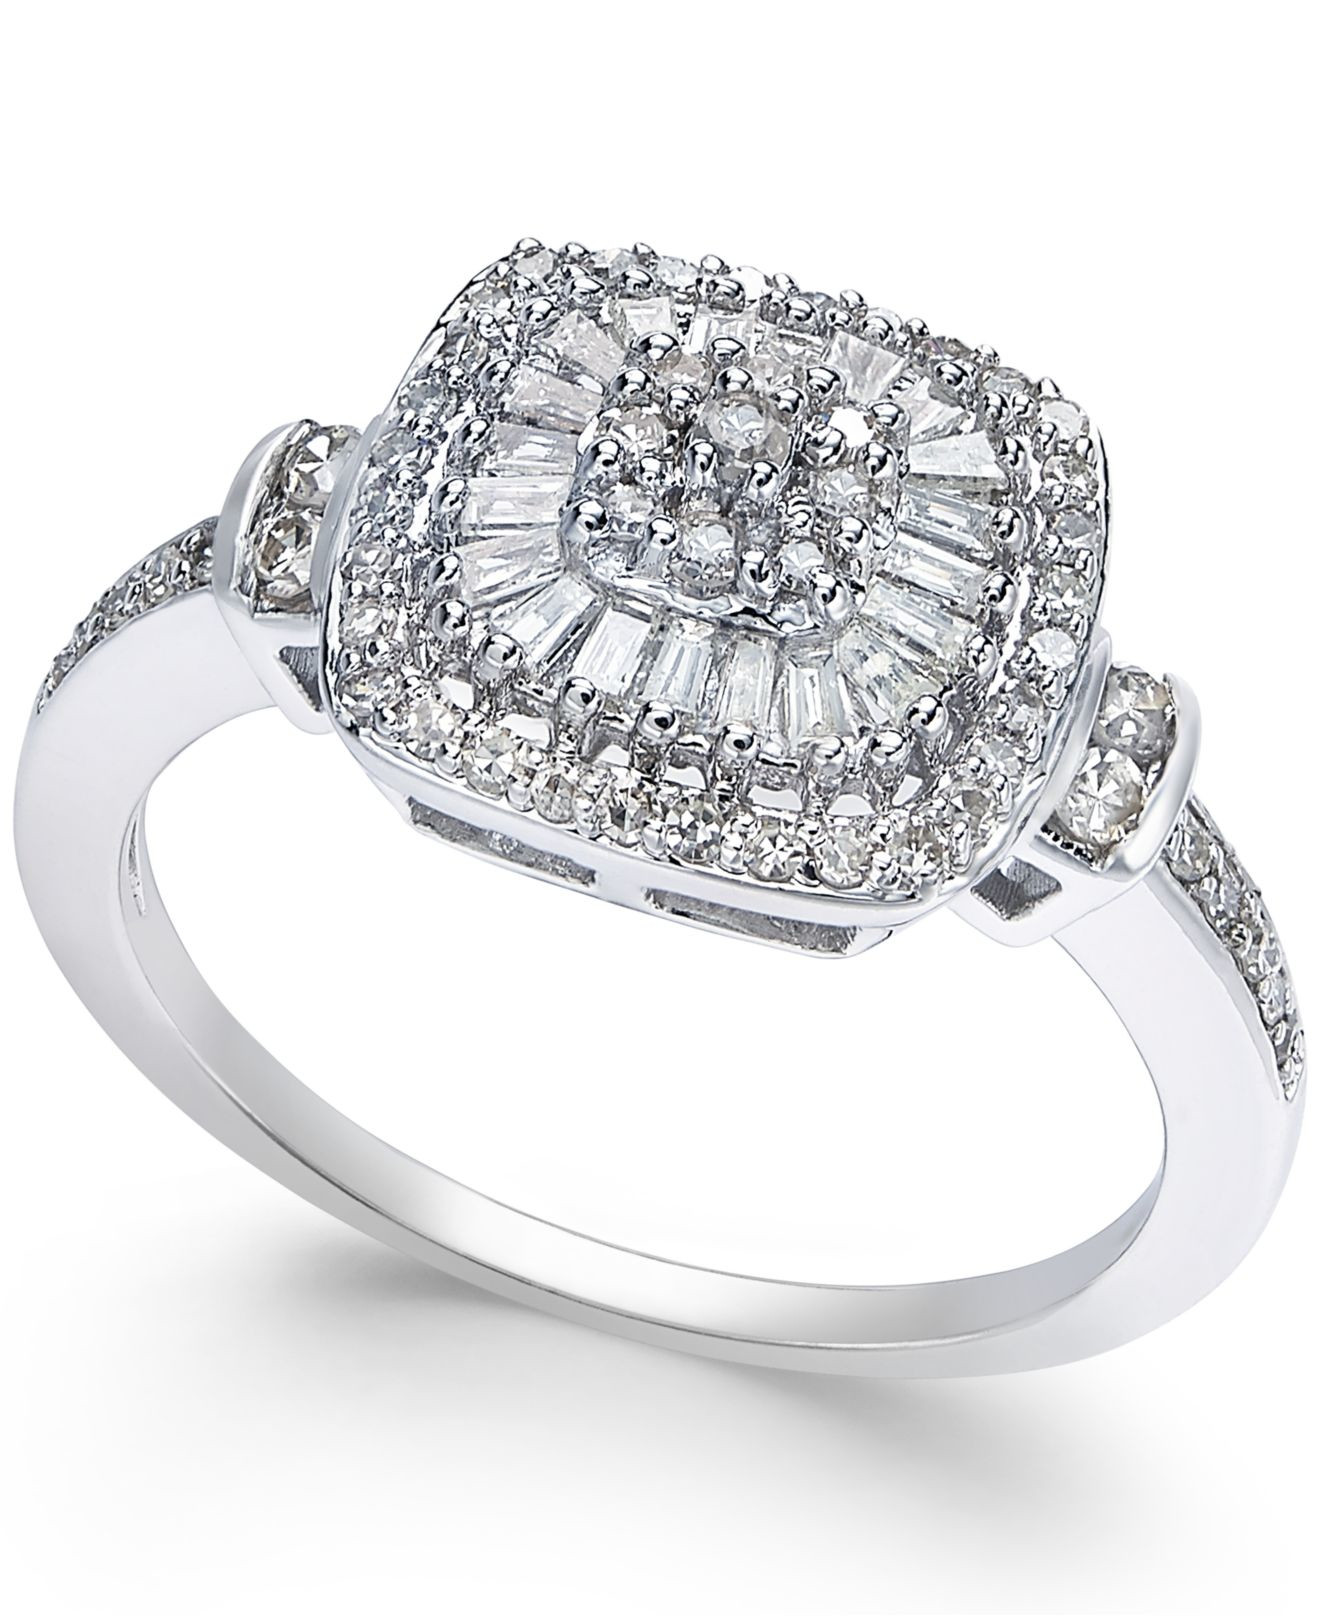 Macys Diamond Rings
 Macy s Diamond Vintage inspired Engagement Ring 1 2 Ct T